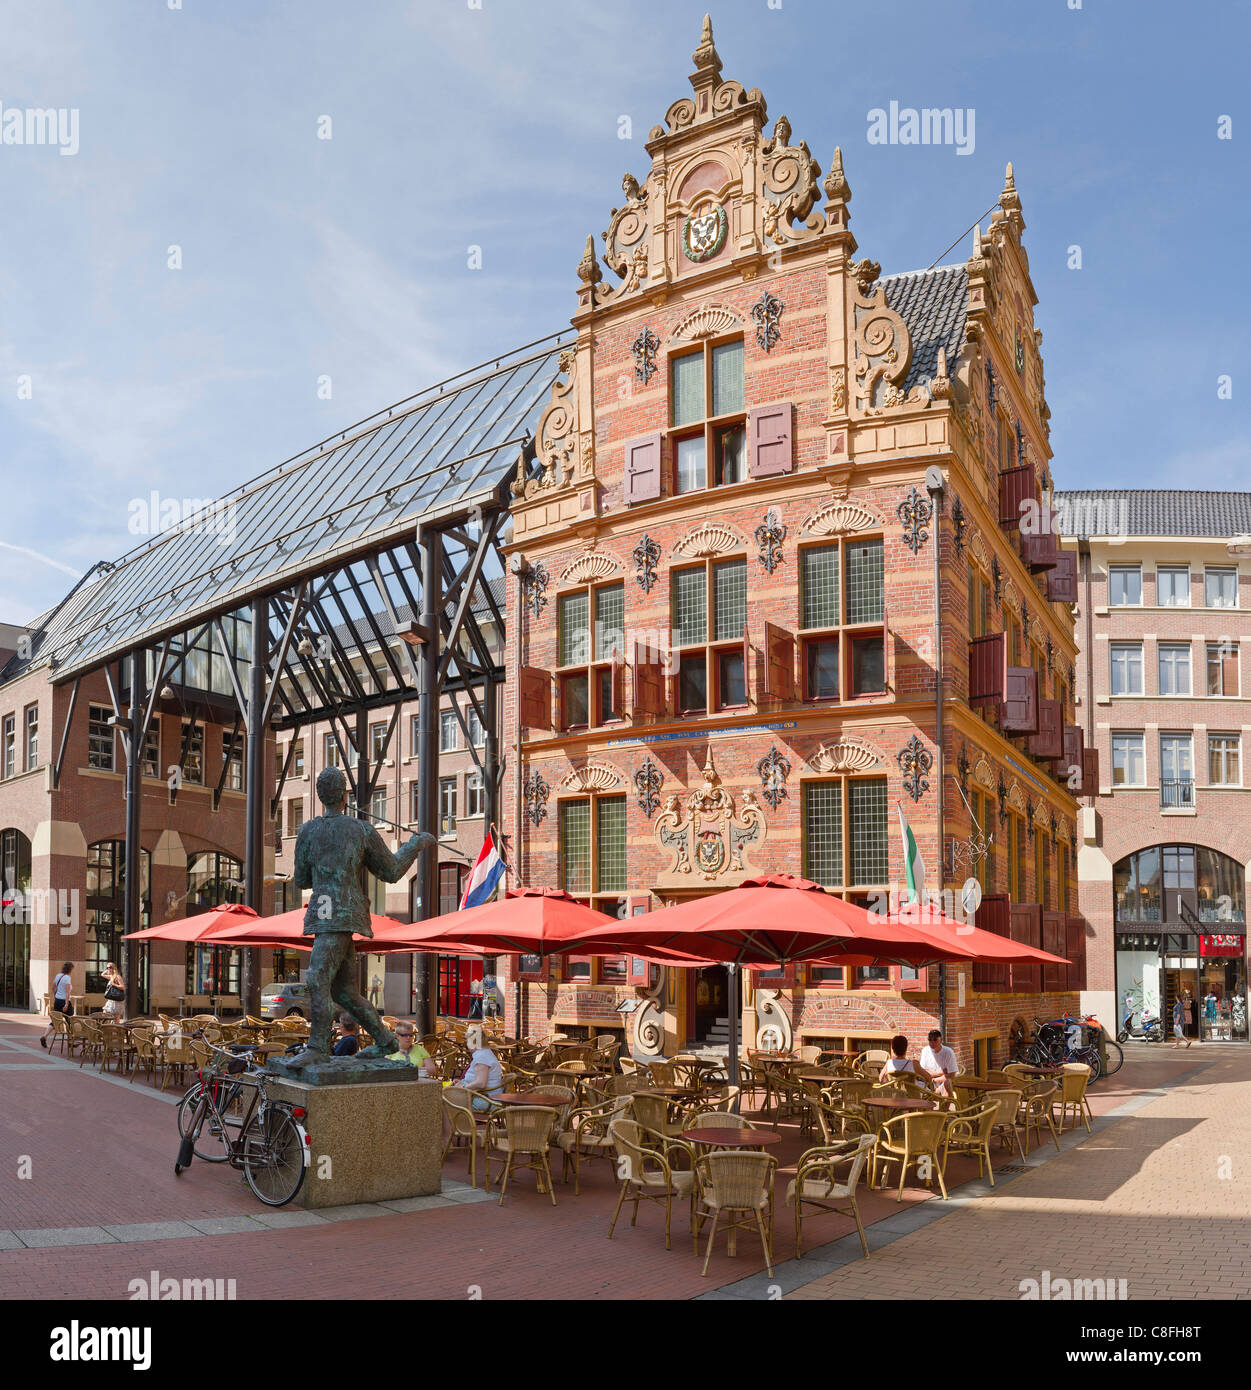 Netherlands, Europe, Holland, Groningen, formerly Gold exchange, city, village, summer, people, outdoor cafe, Stock Photo